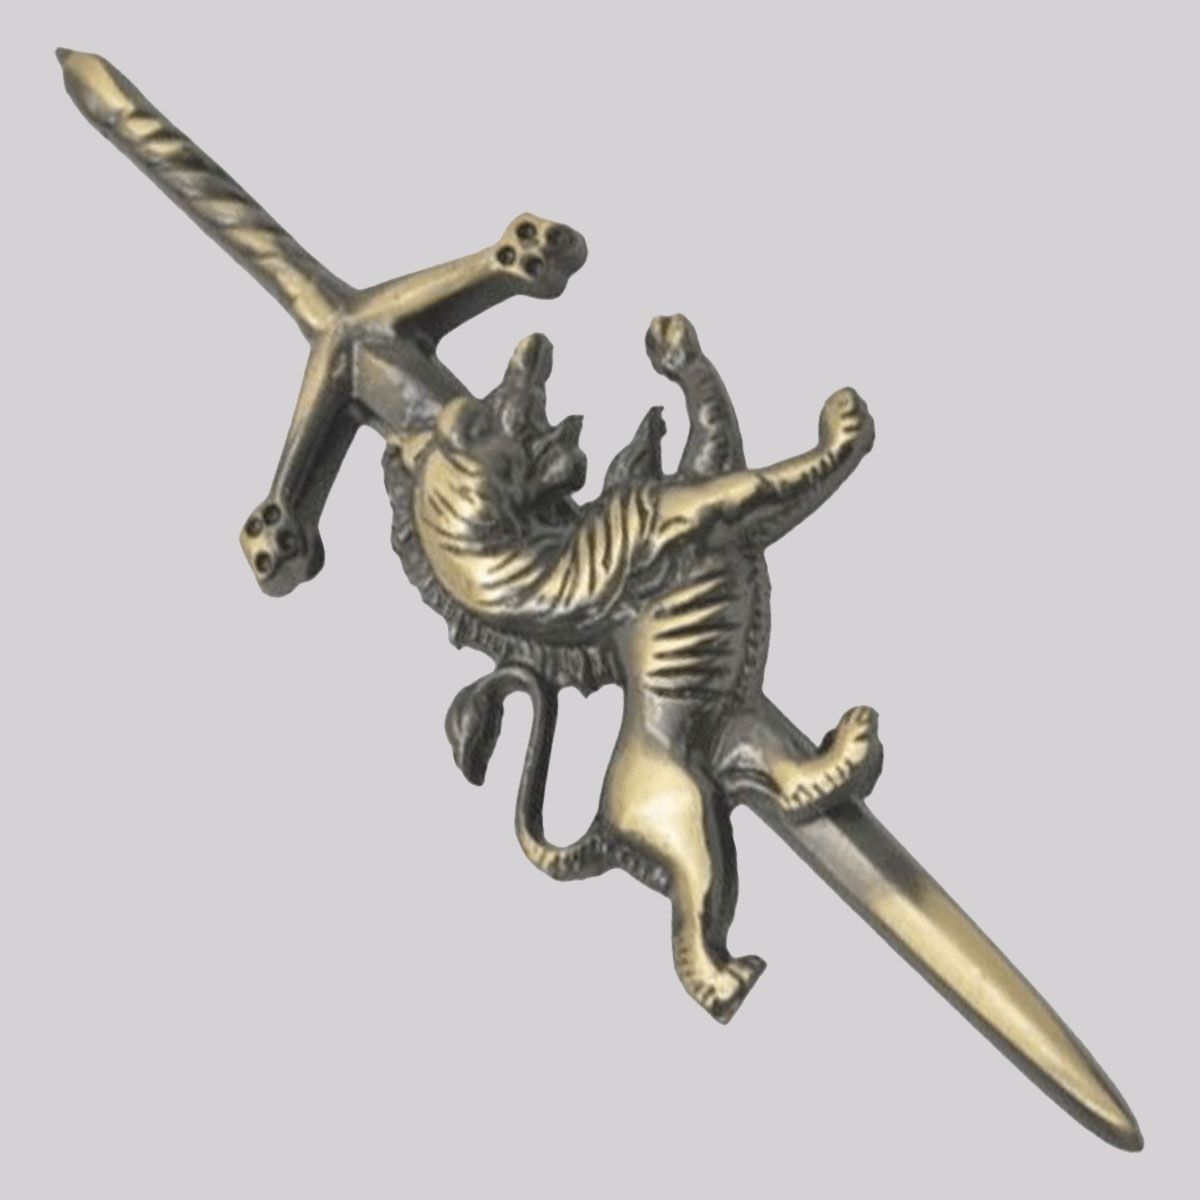 Rampant Lion Sword Kilt Pin